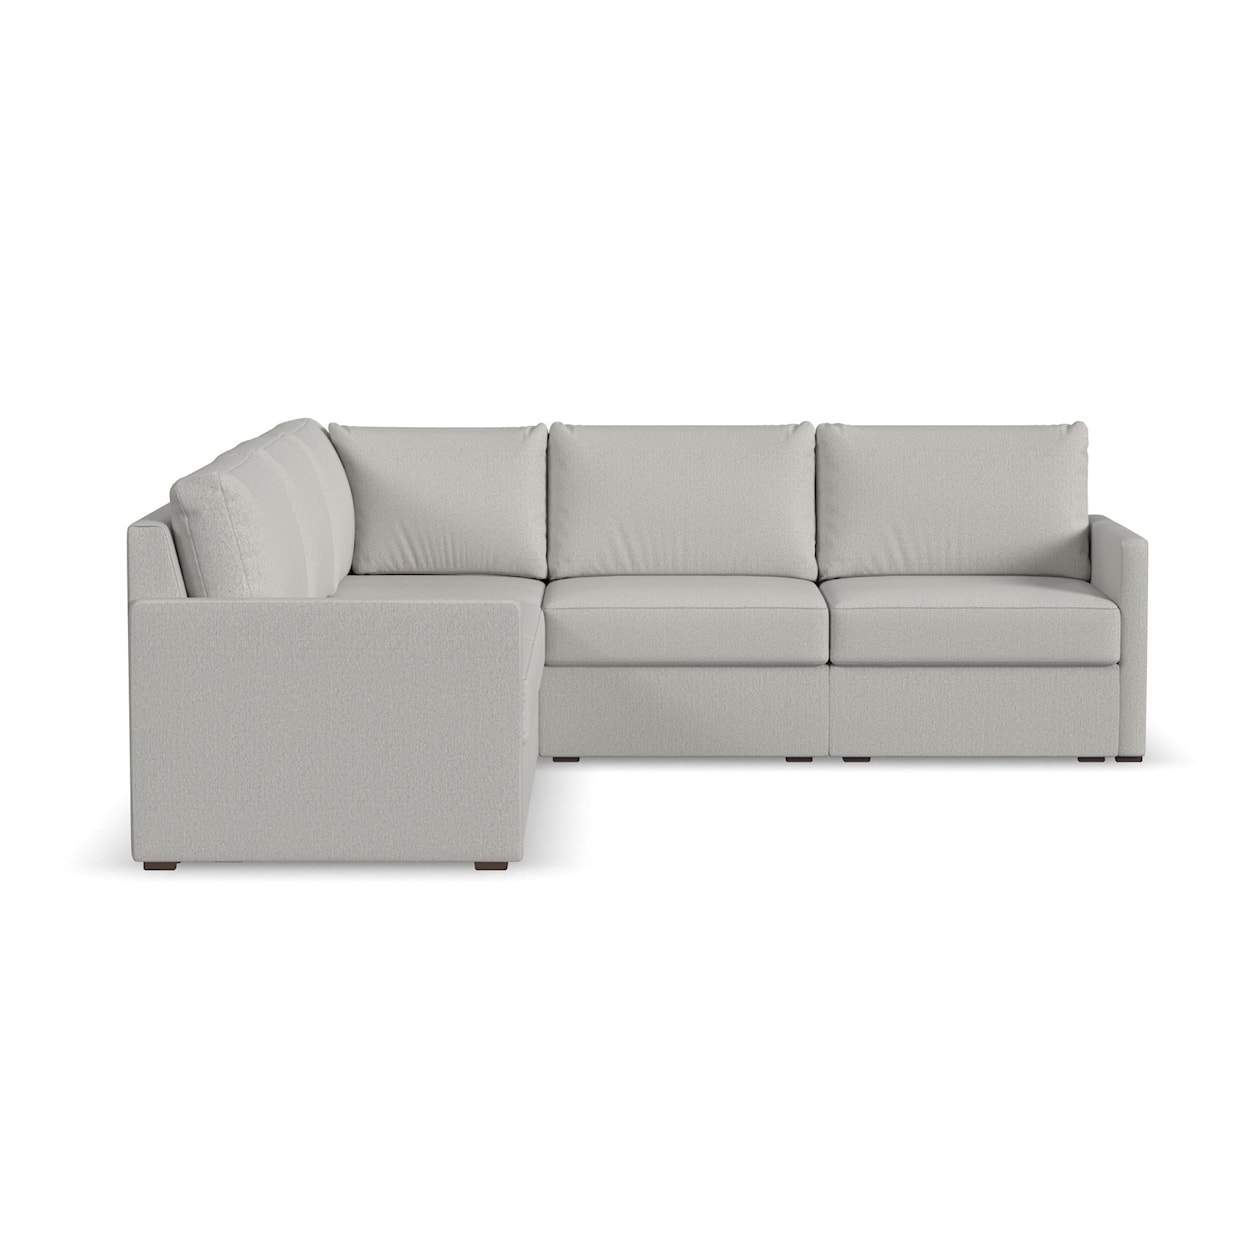 Flexsteel Flex 5-Piece Sectional Sofa